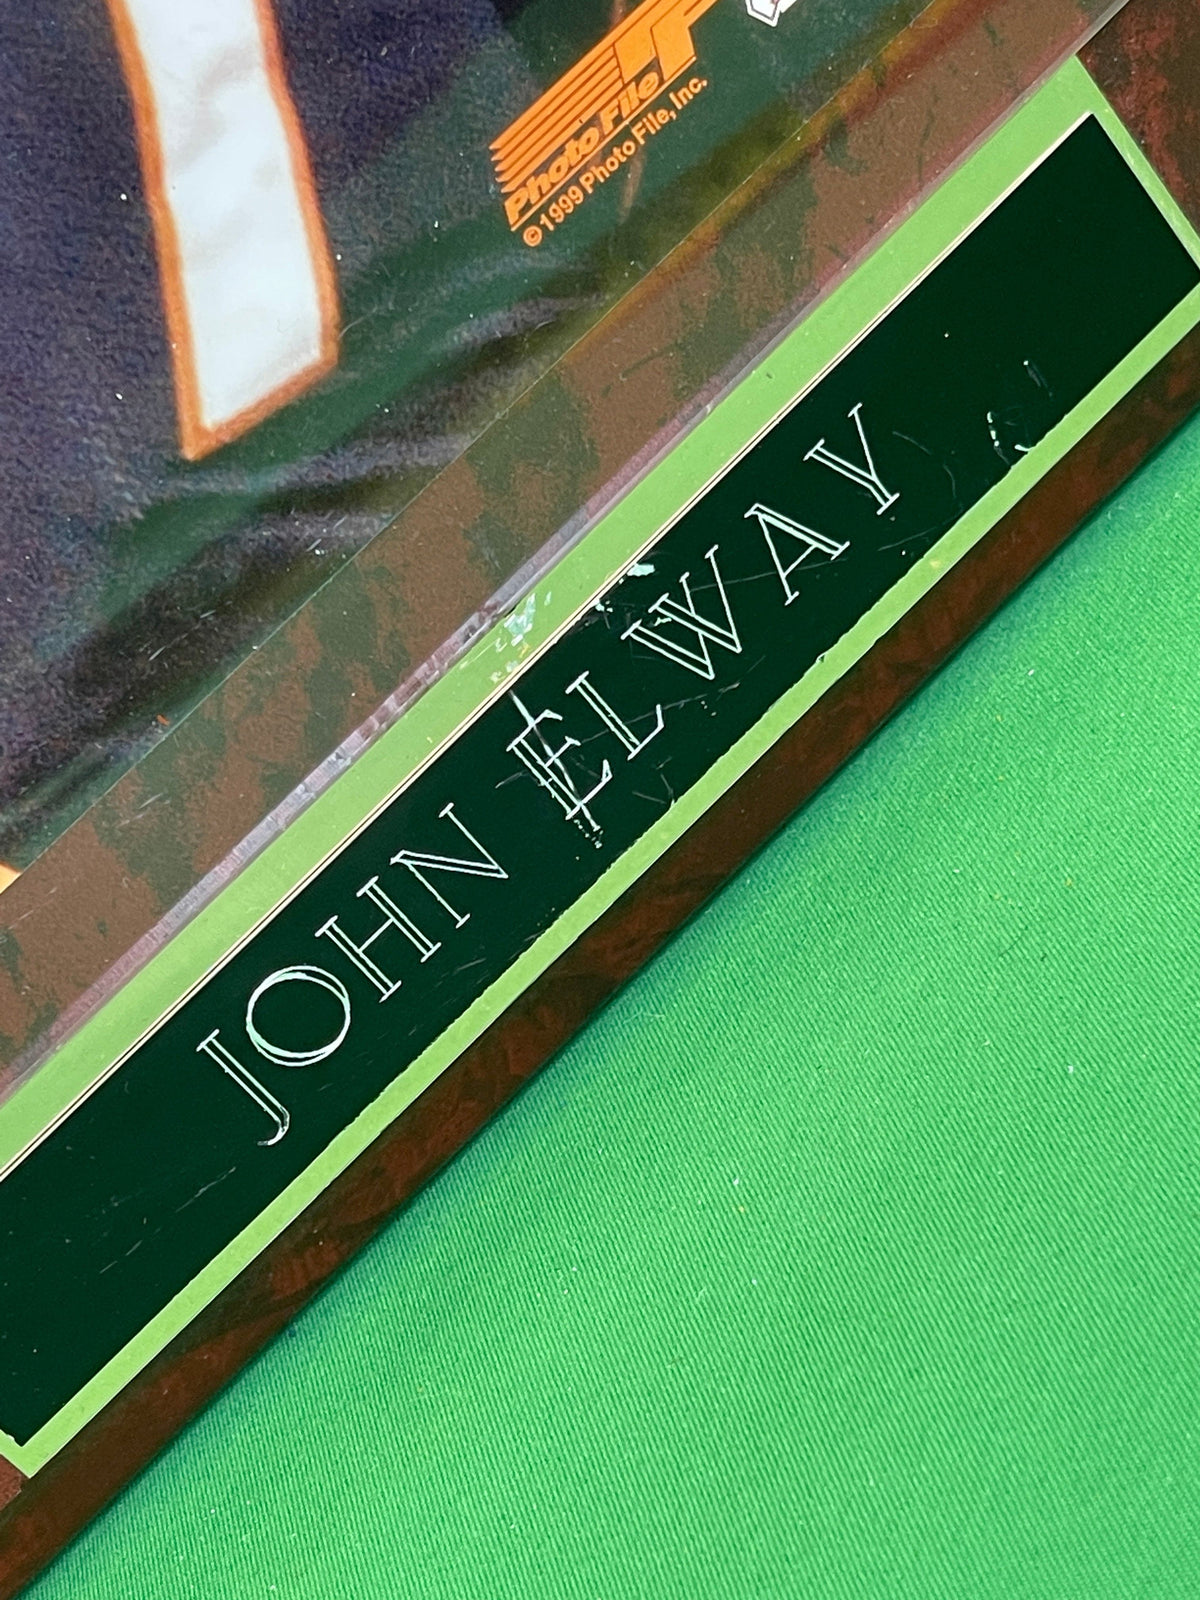 NFL Denver Broncos John Elway #7 Super Bowl XXXIII Plaque